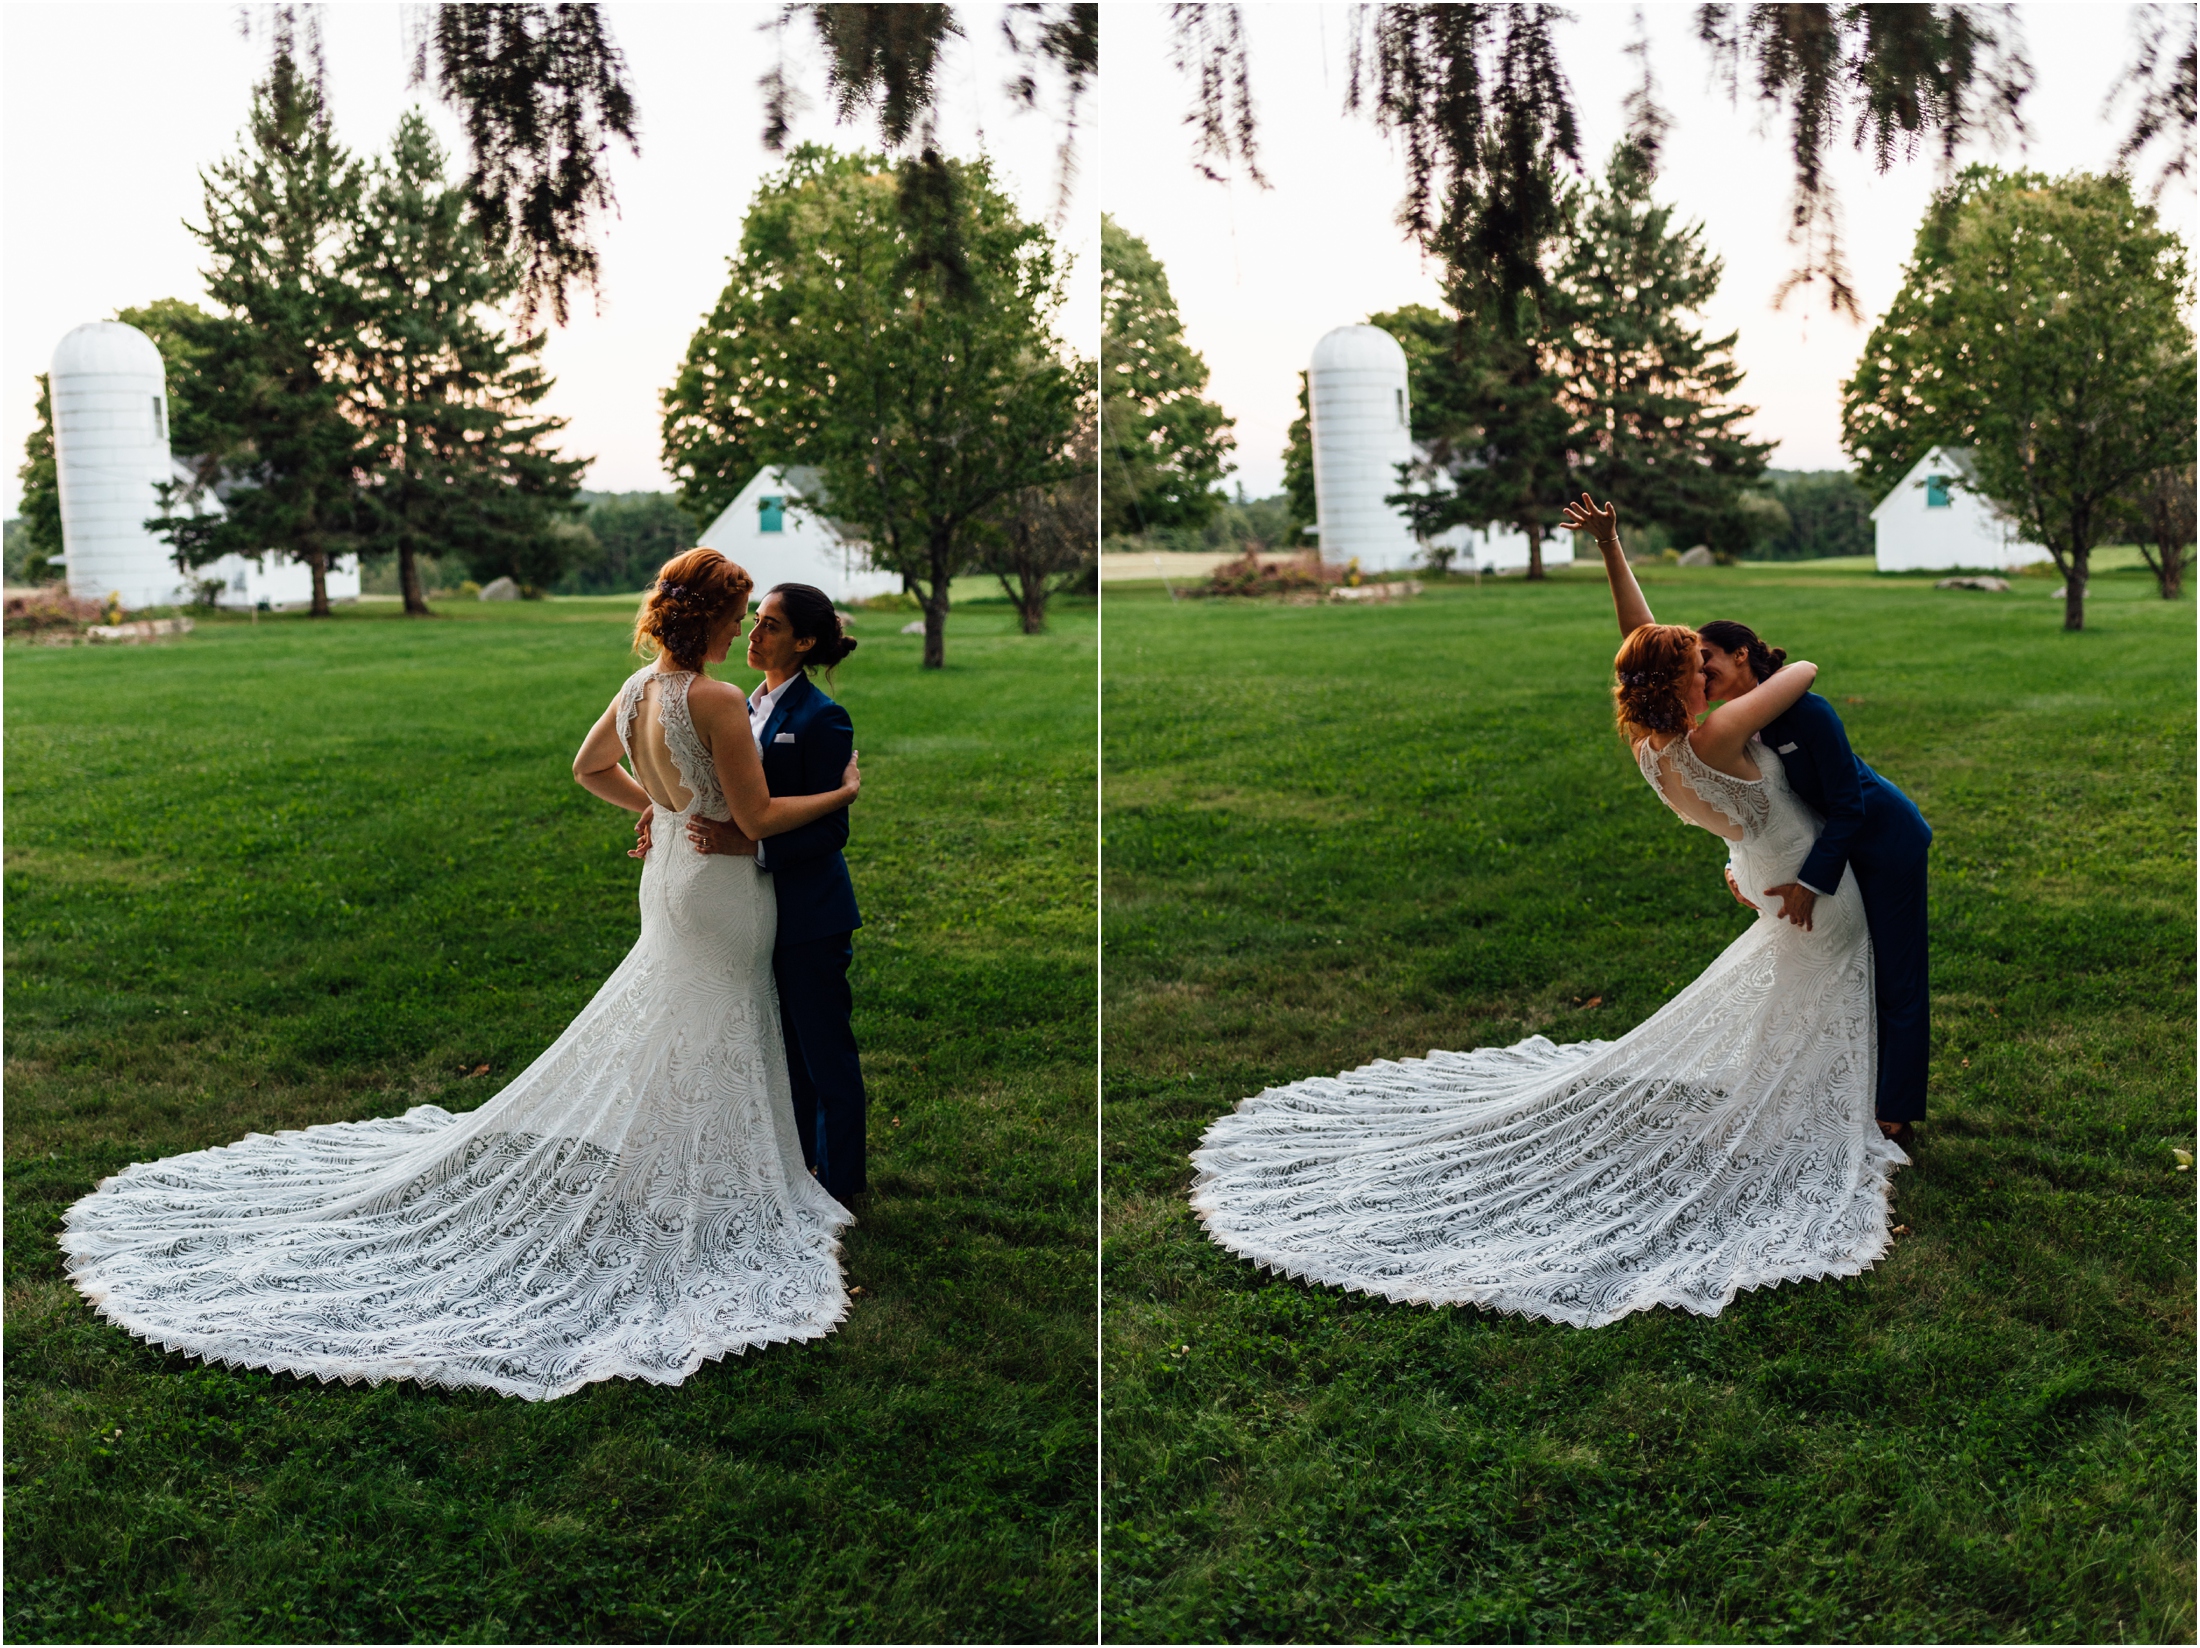 Kate_and_Michele_New_Hampshire_wedding_the_photo_farm_0633.jpg